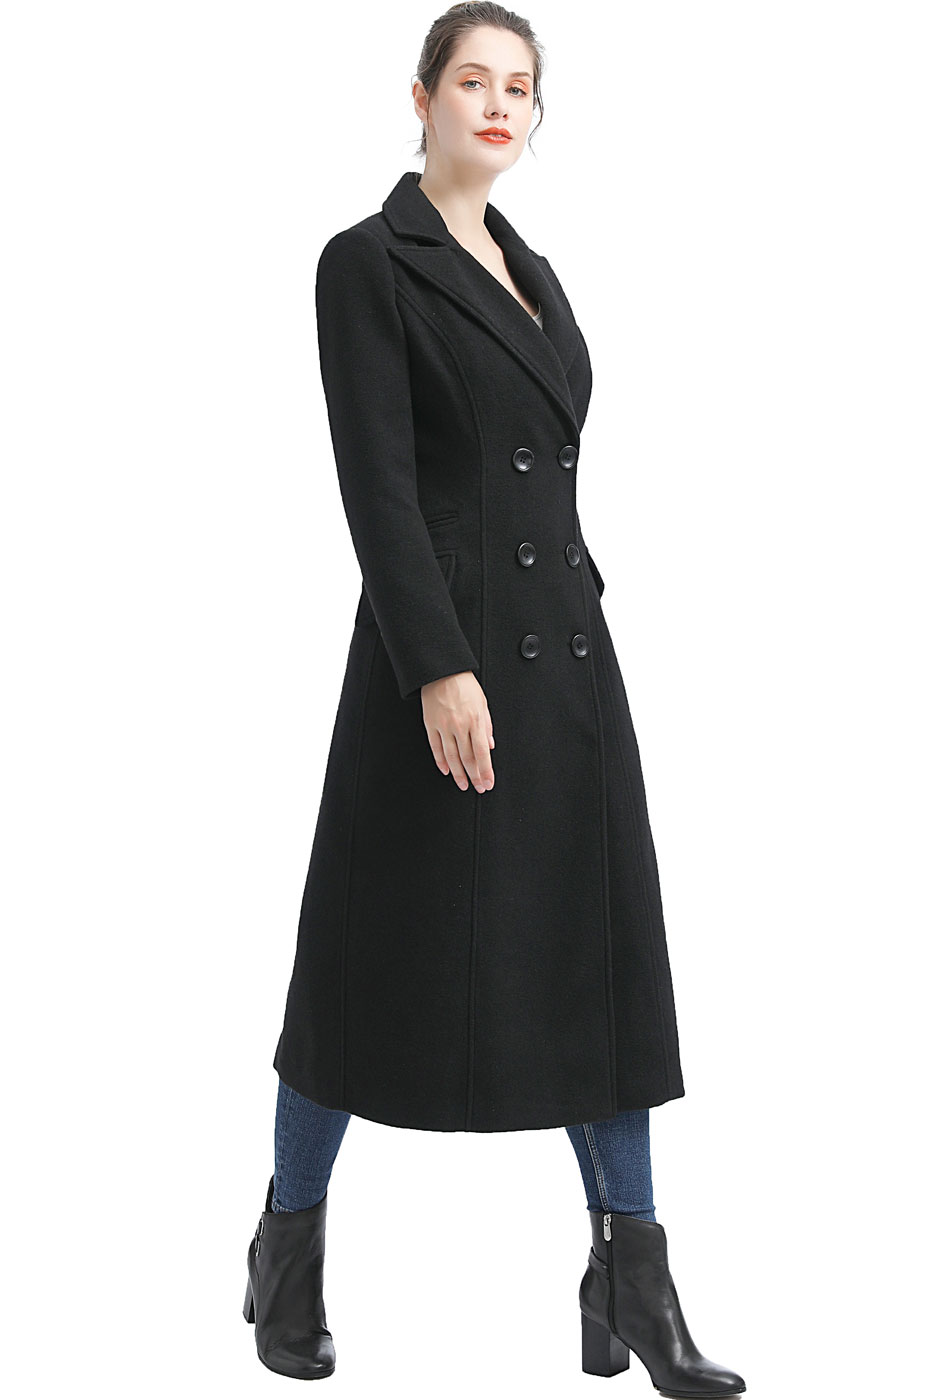 Women Fay Wool Walking Coat (Regular & Plus Size & Petite) - image 2 of 4